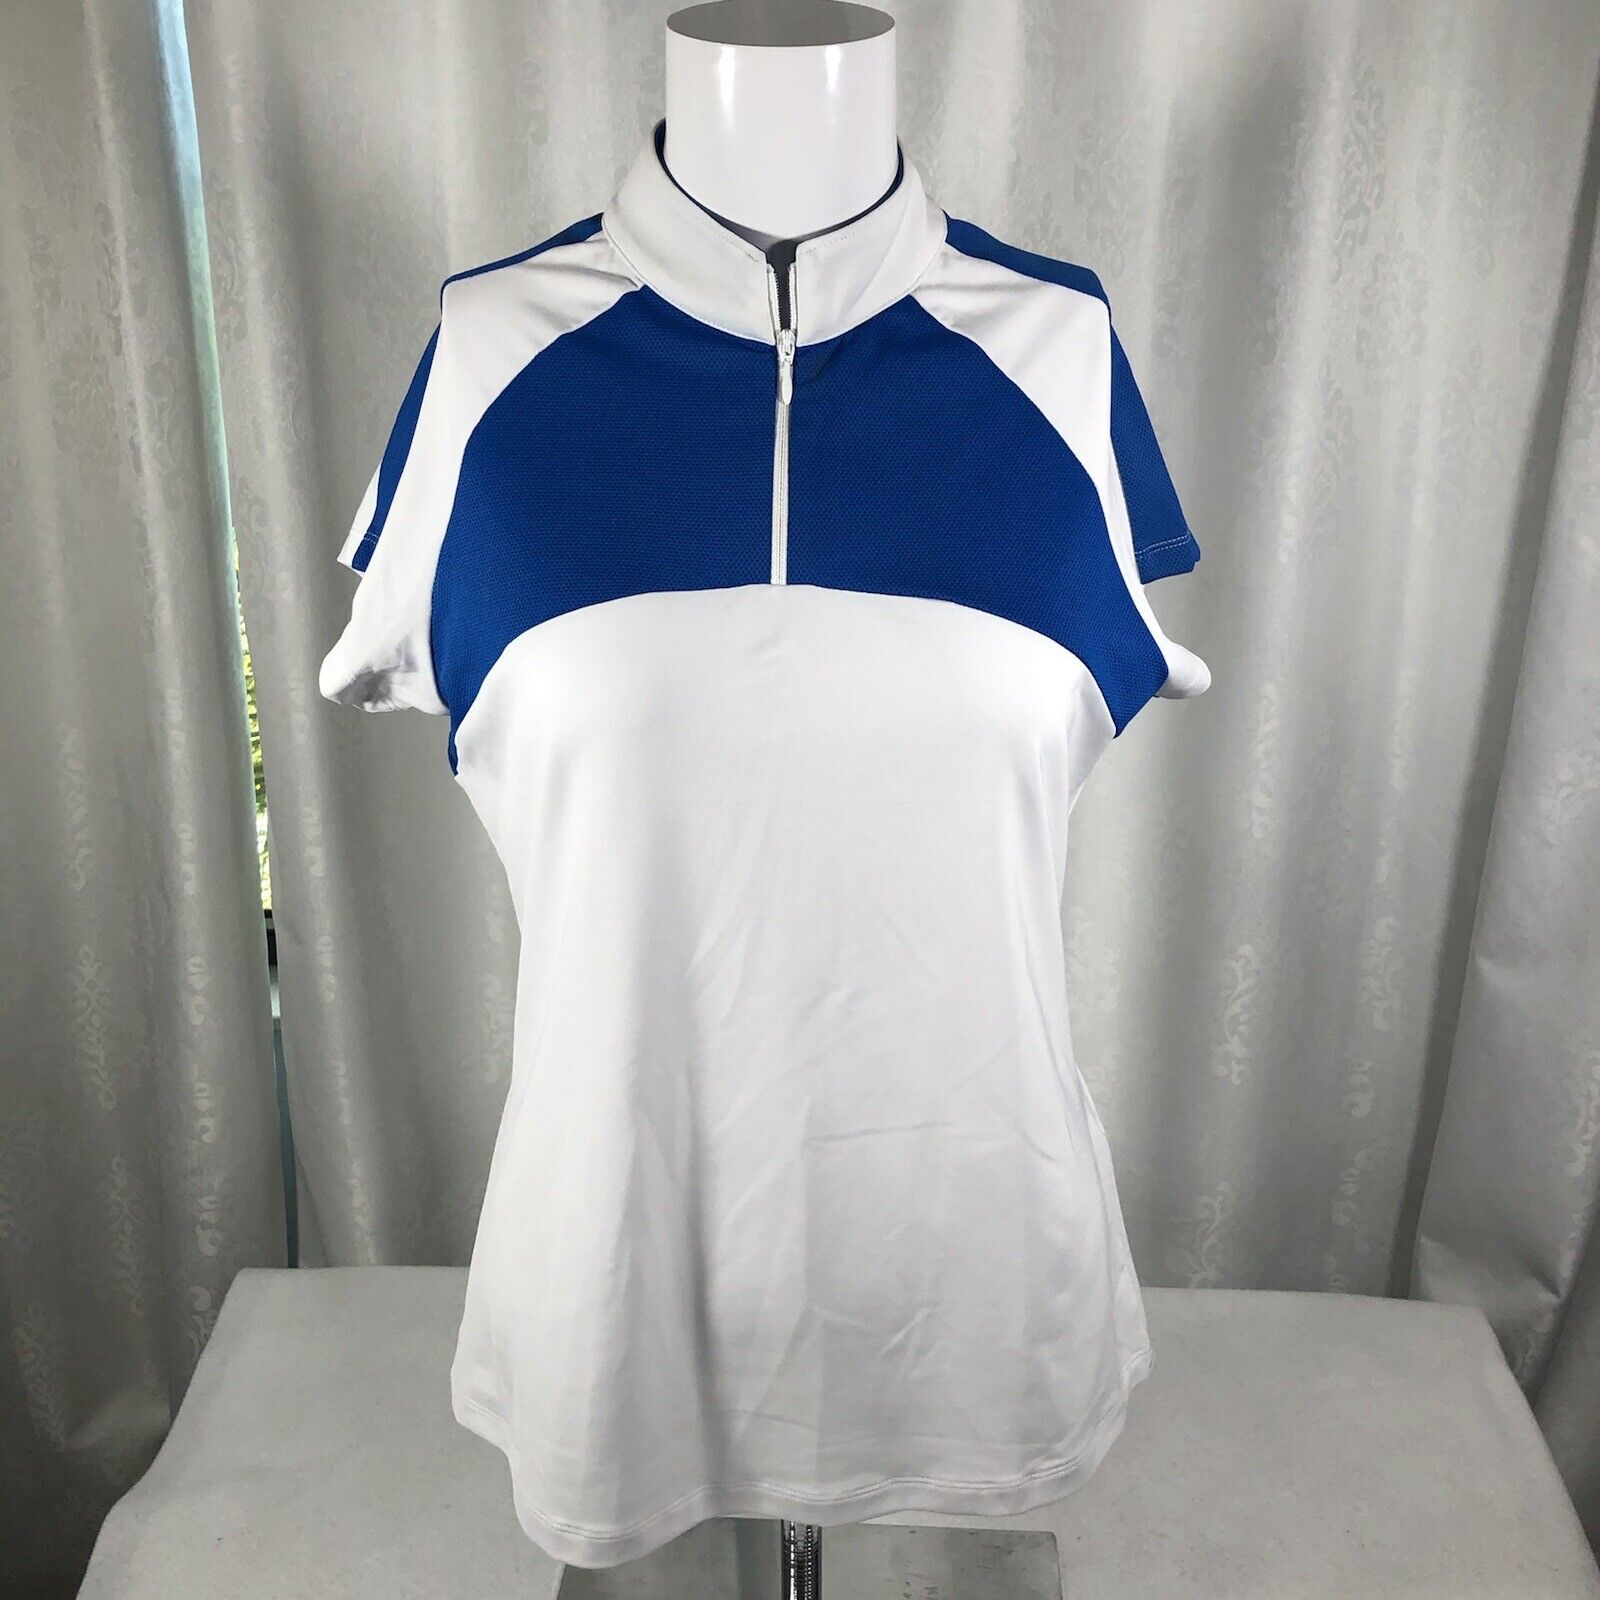 Footjoy Raglan Polo Zipper Shirt Women’s Small White Royal Blue NWT 